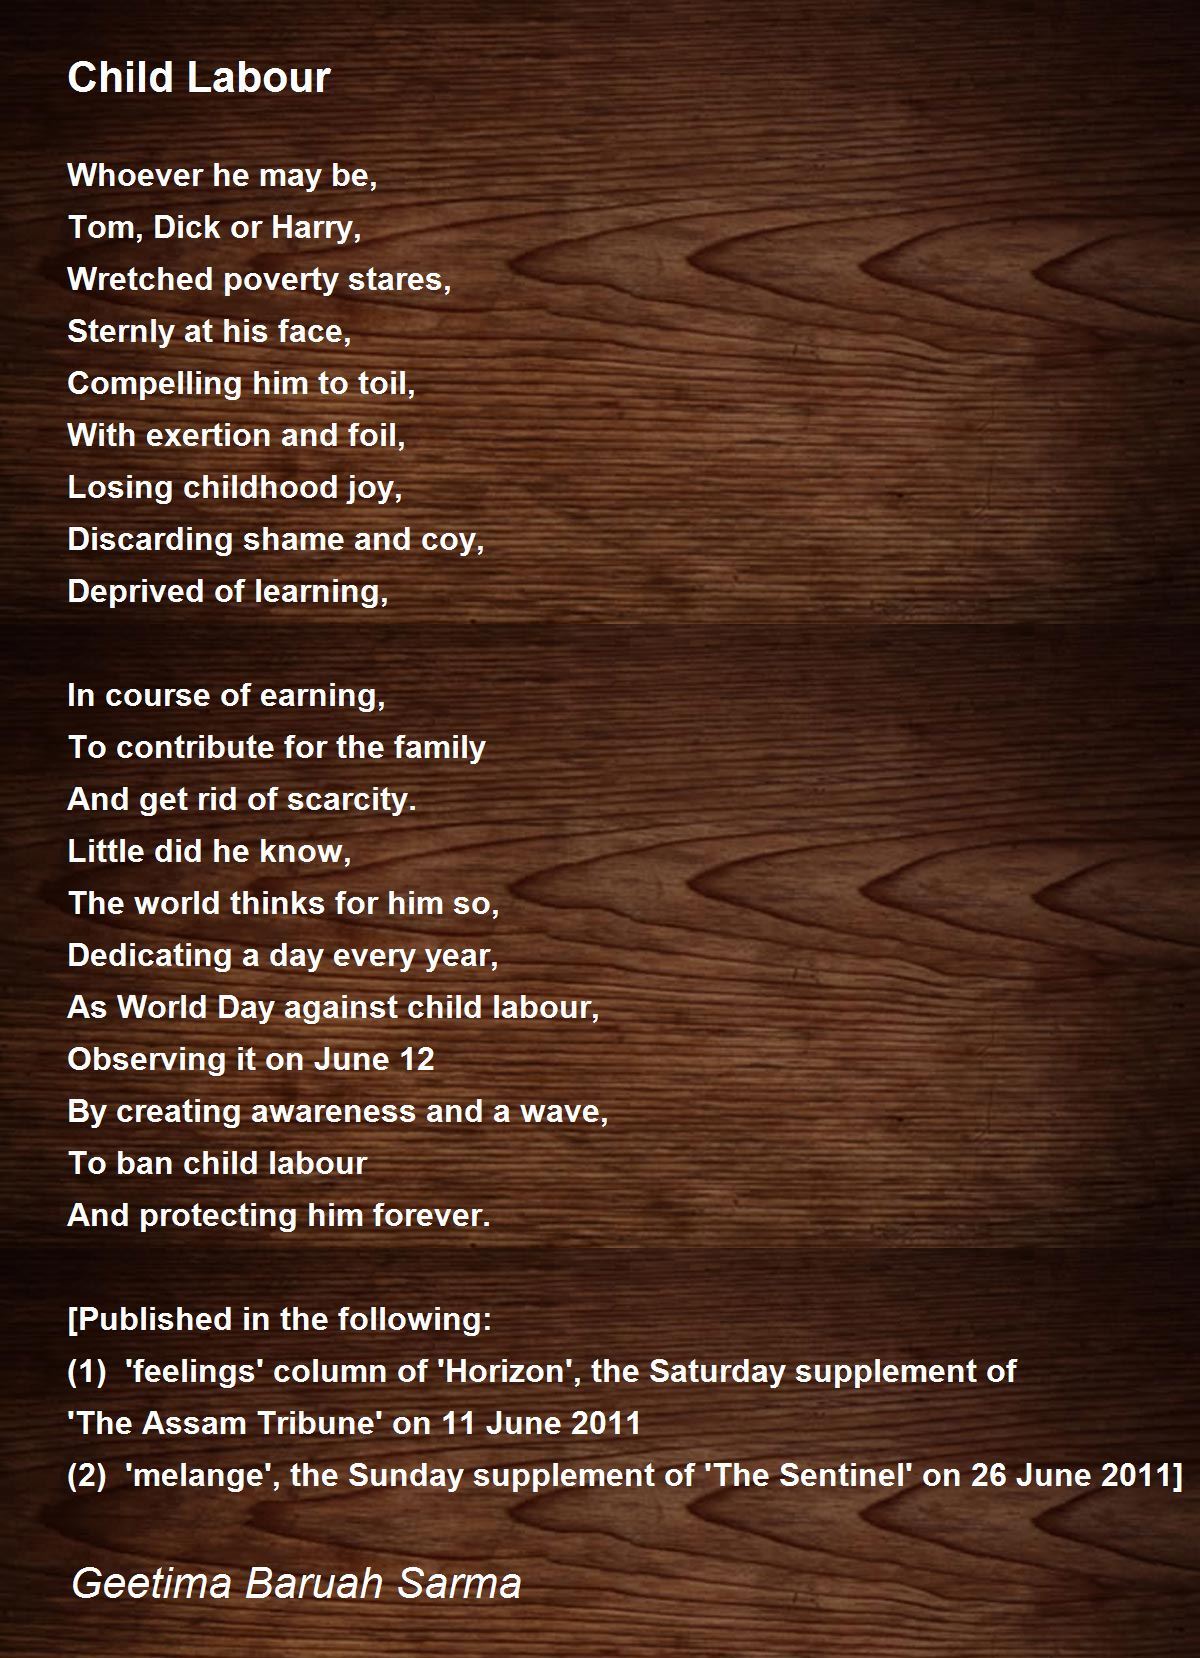 Child Labour By Geetima Baruah Sarma Child Labour Poem